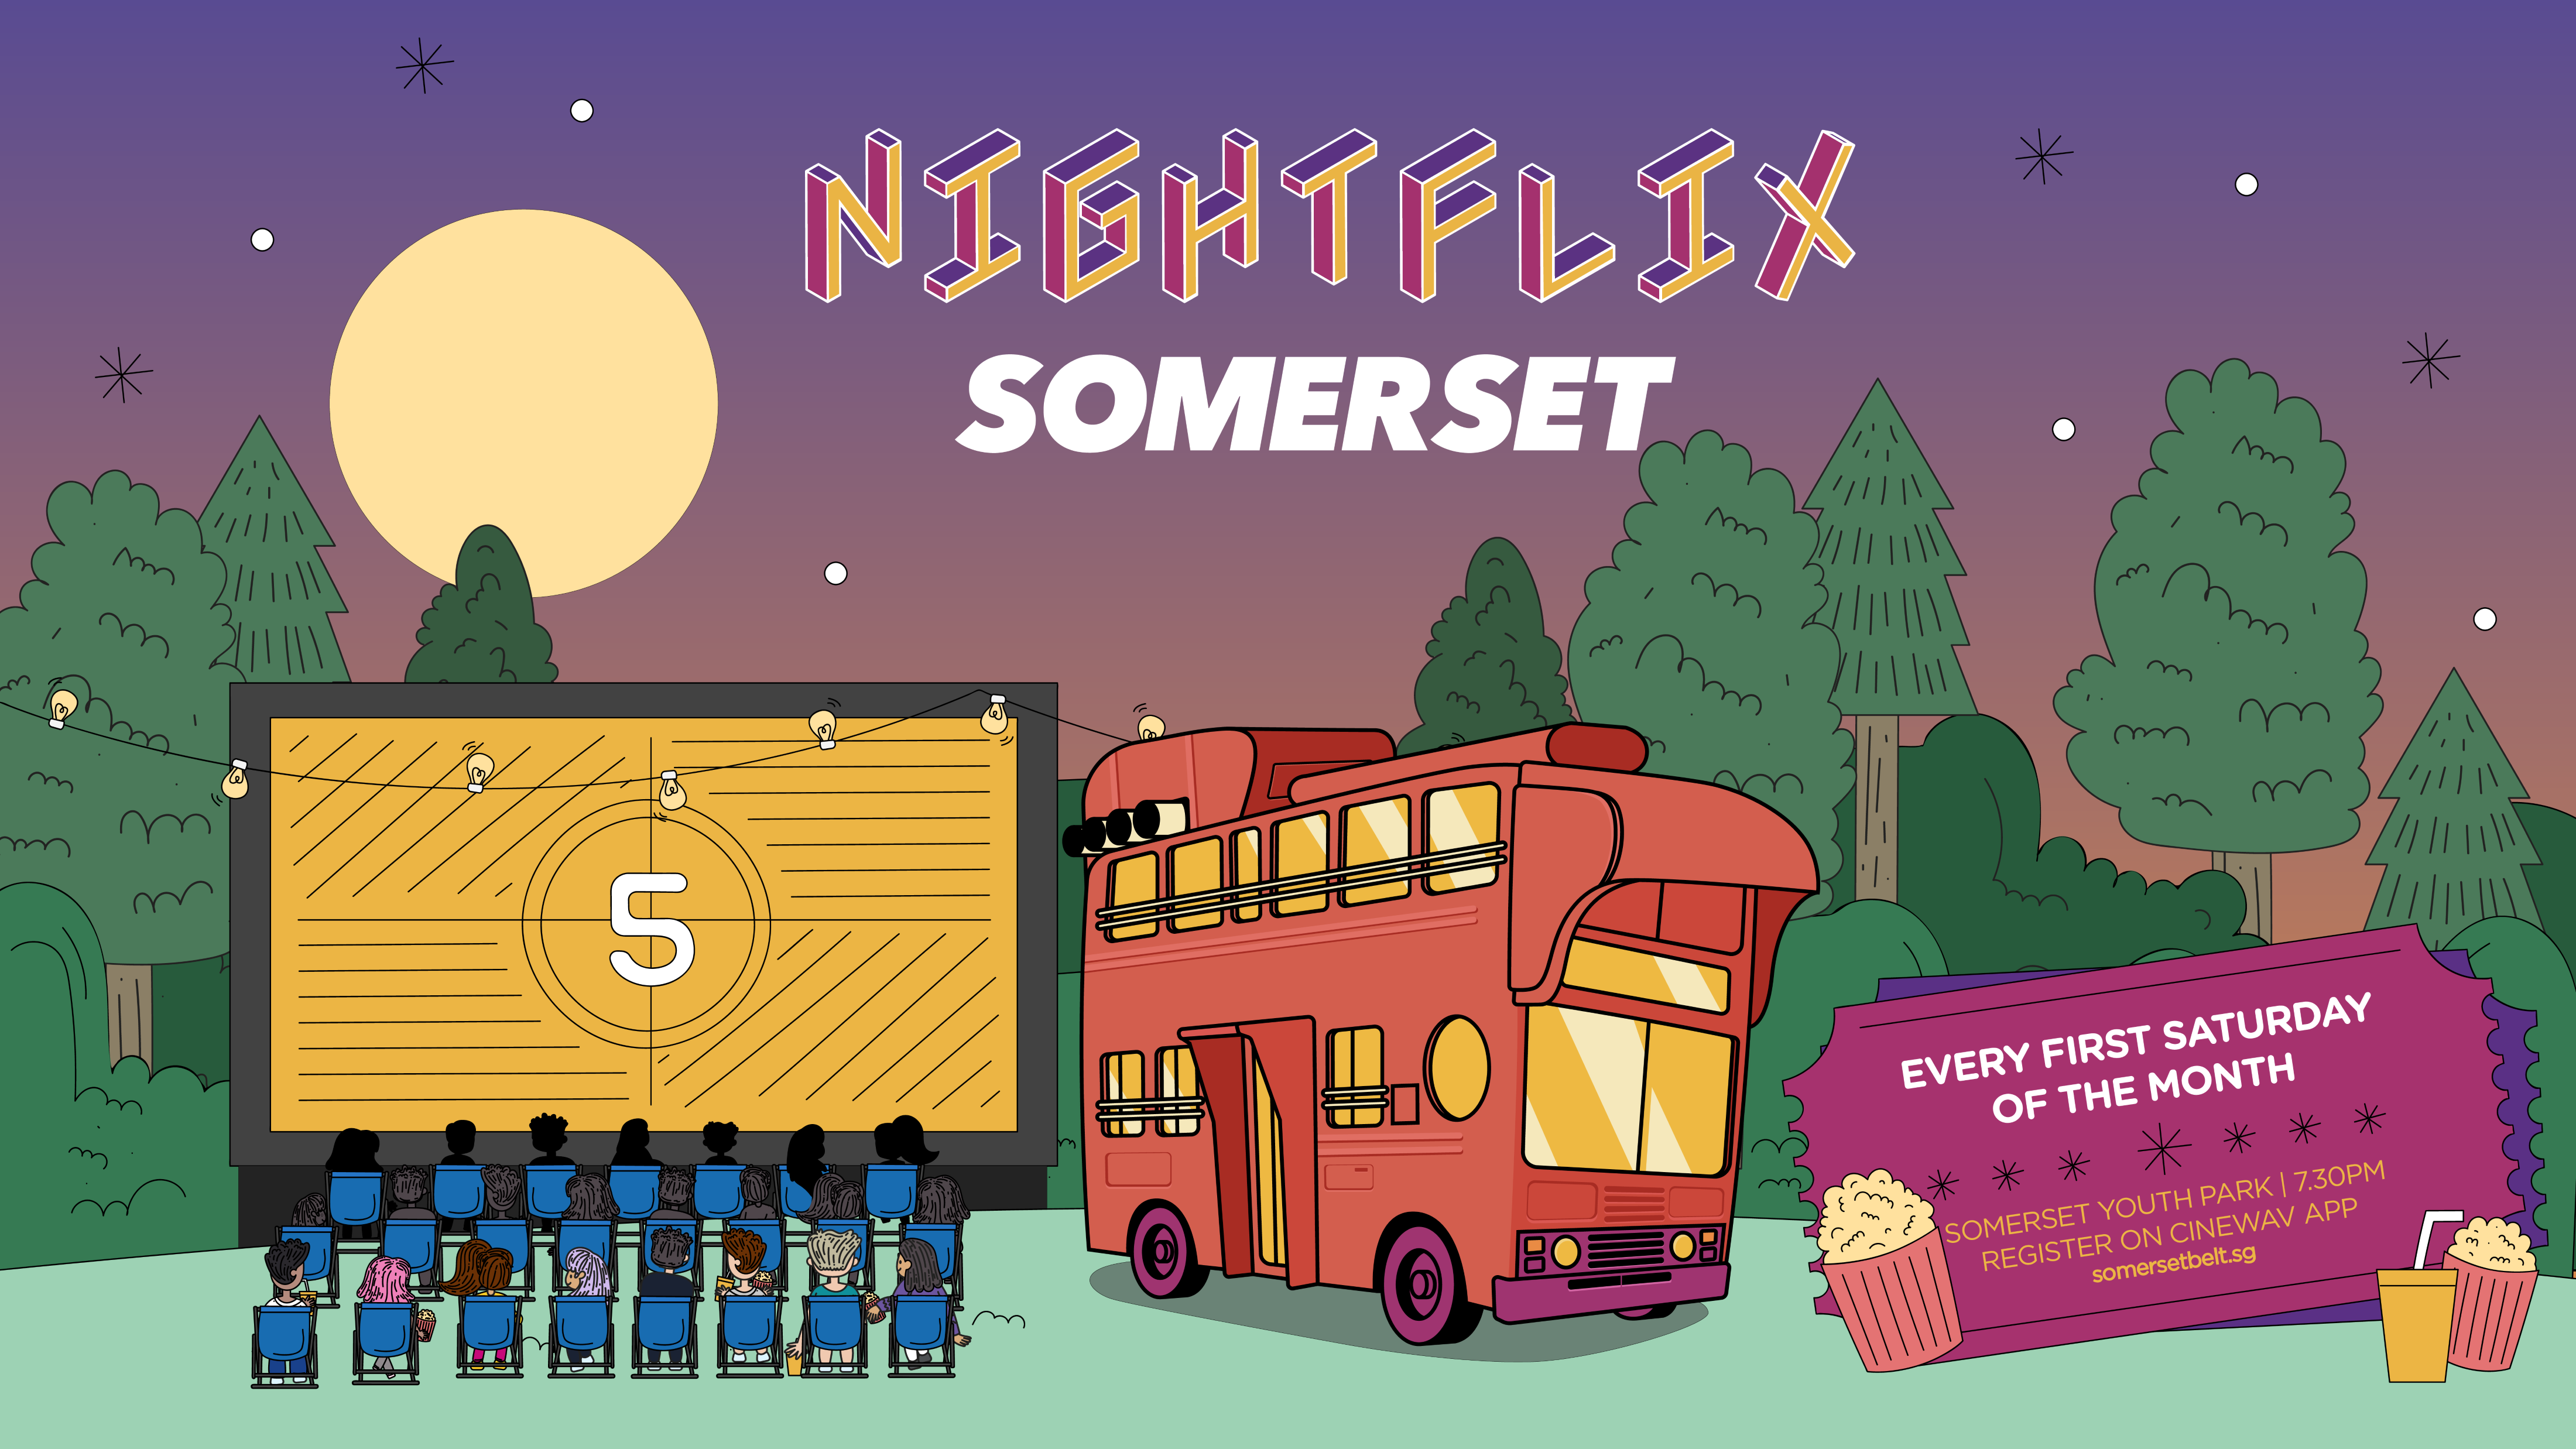 Nightflix Somerset